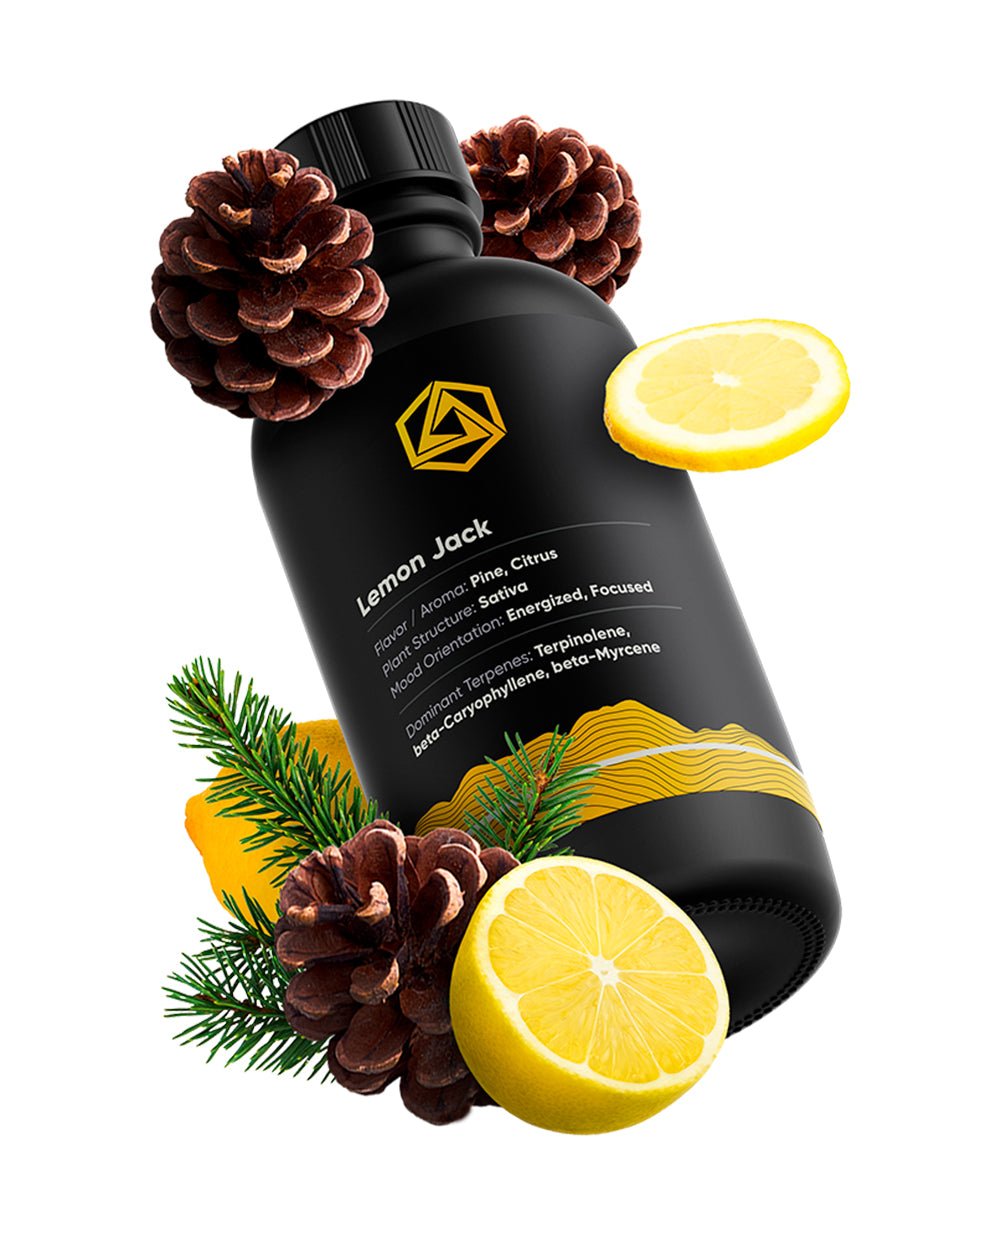 ABSTRAX TECH | Lemon Jack Terpene Blend - 1